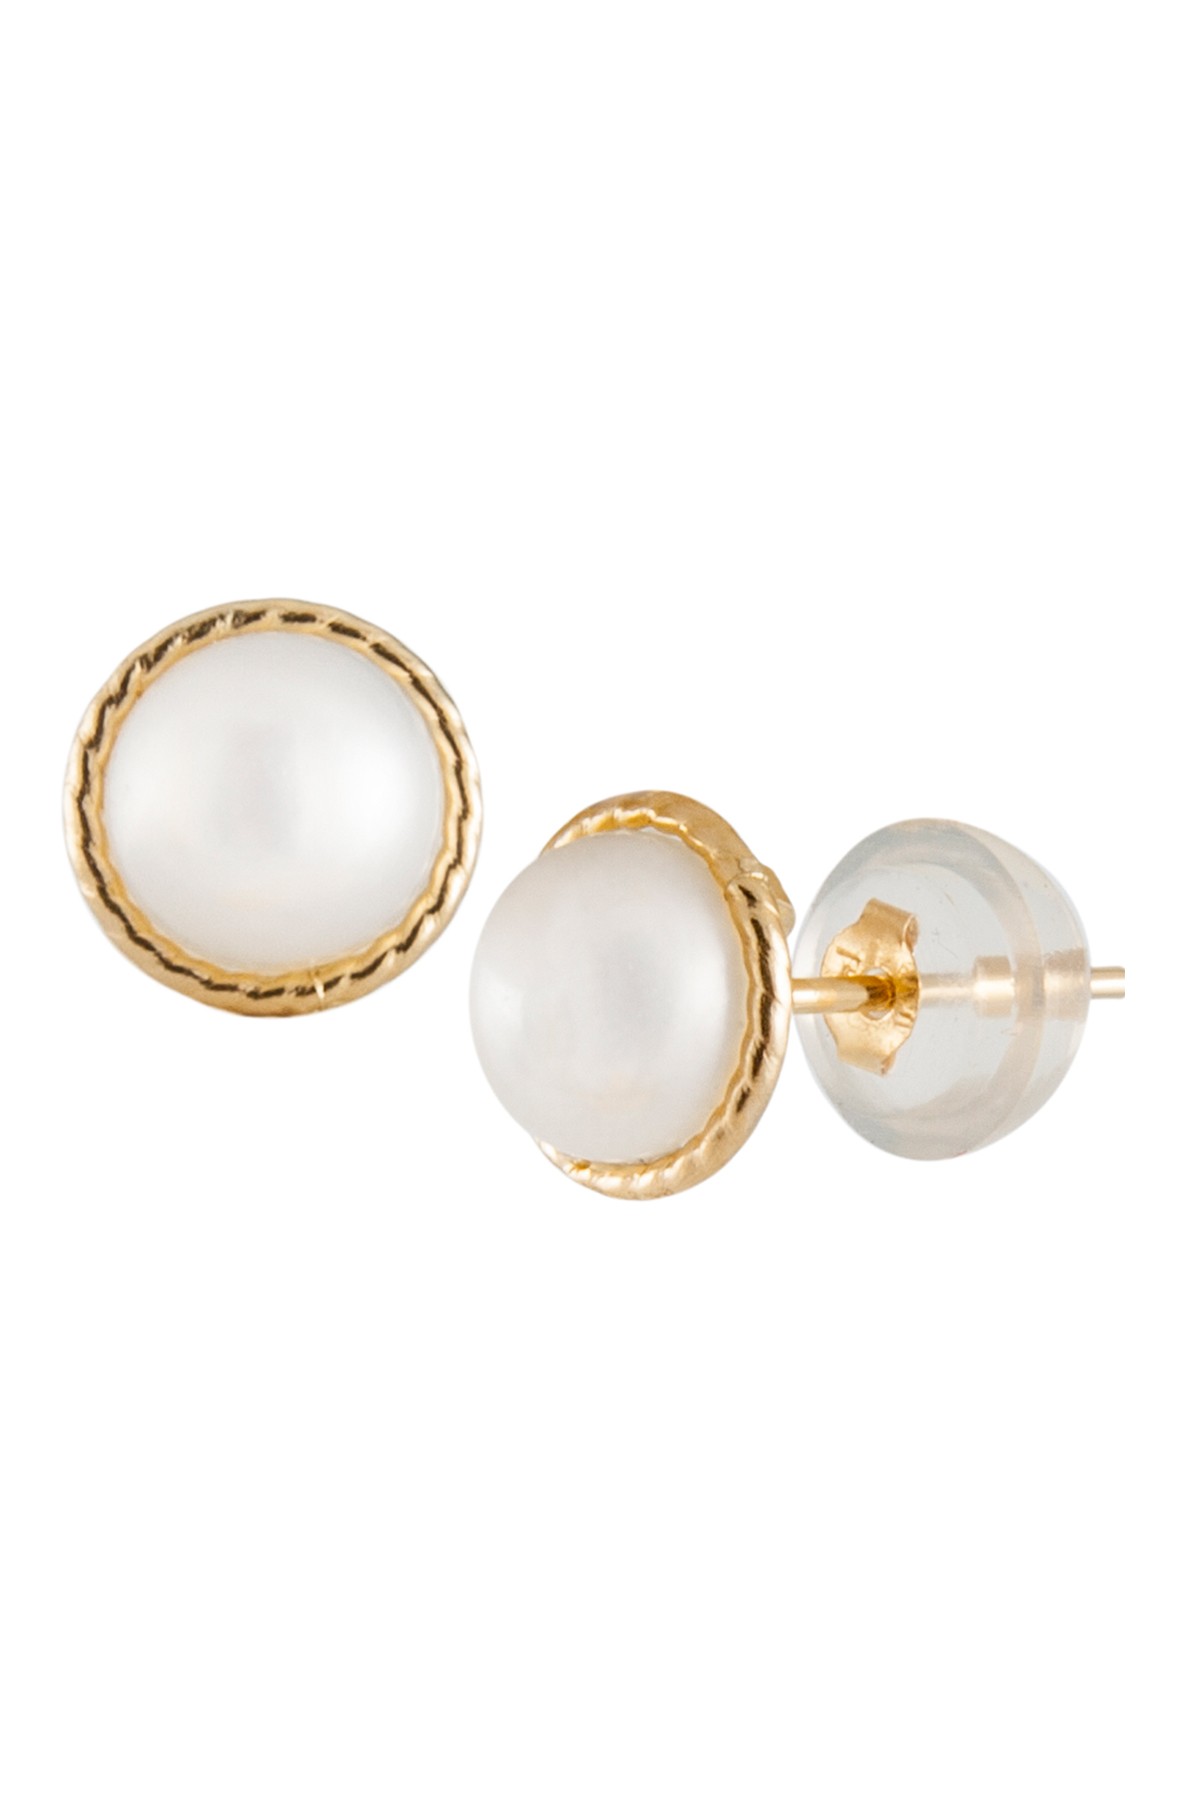 14K Gold Freshwater Pearl Earrings Splendid Pearls